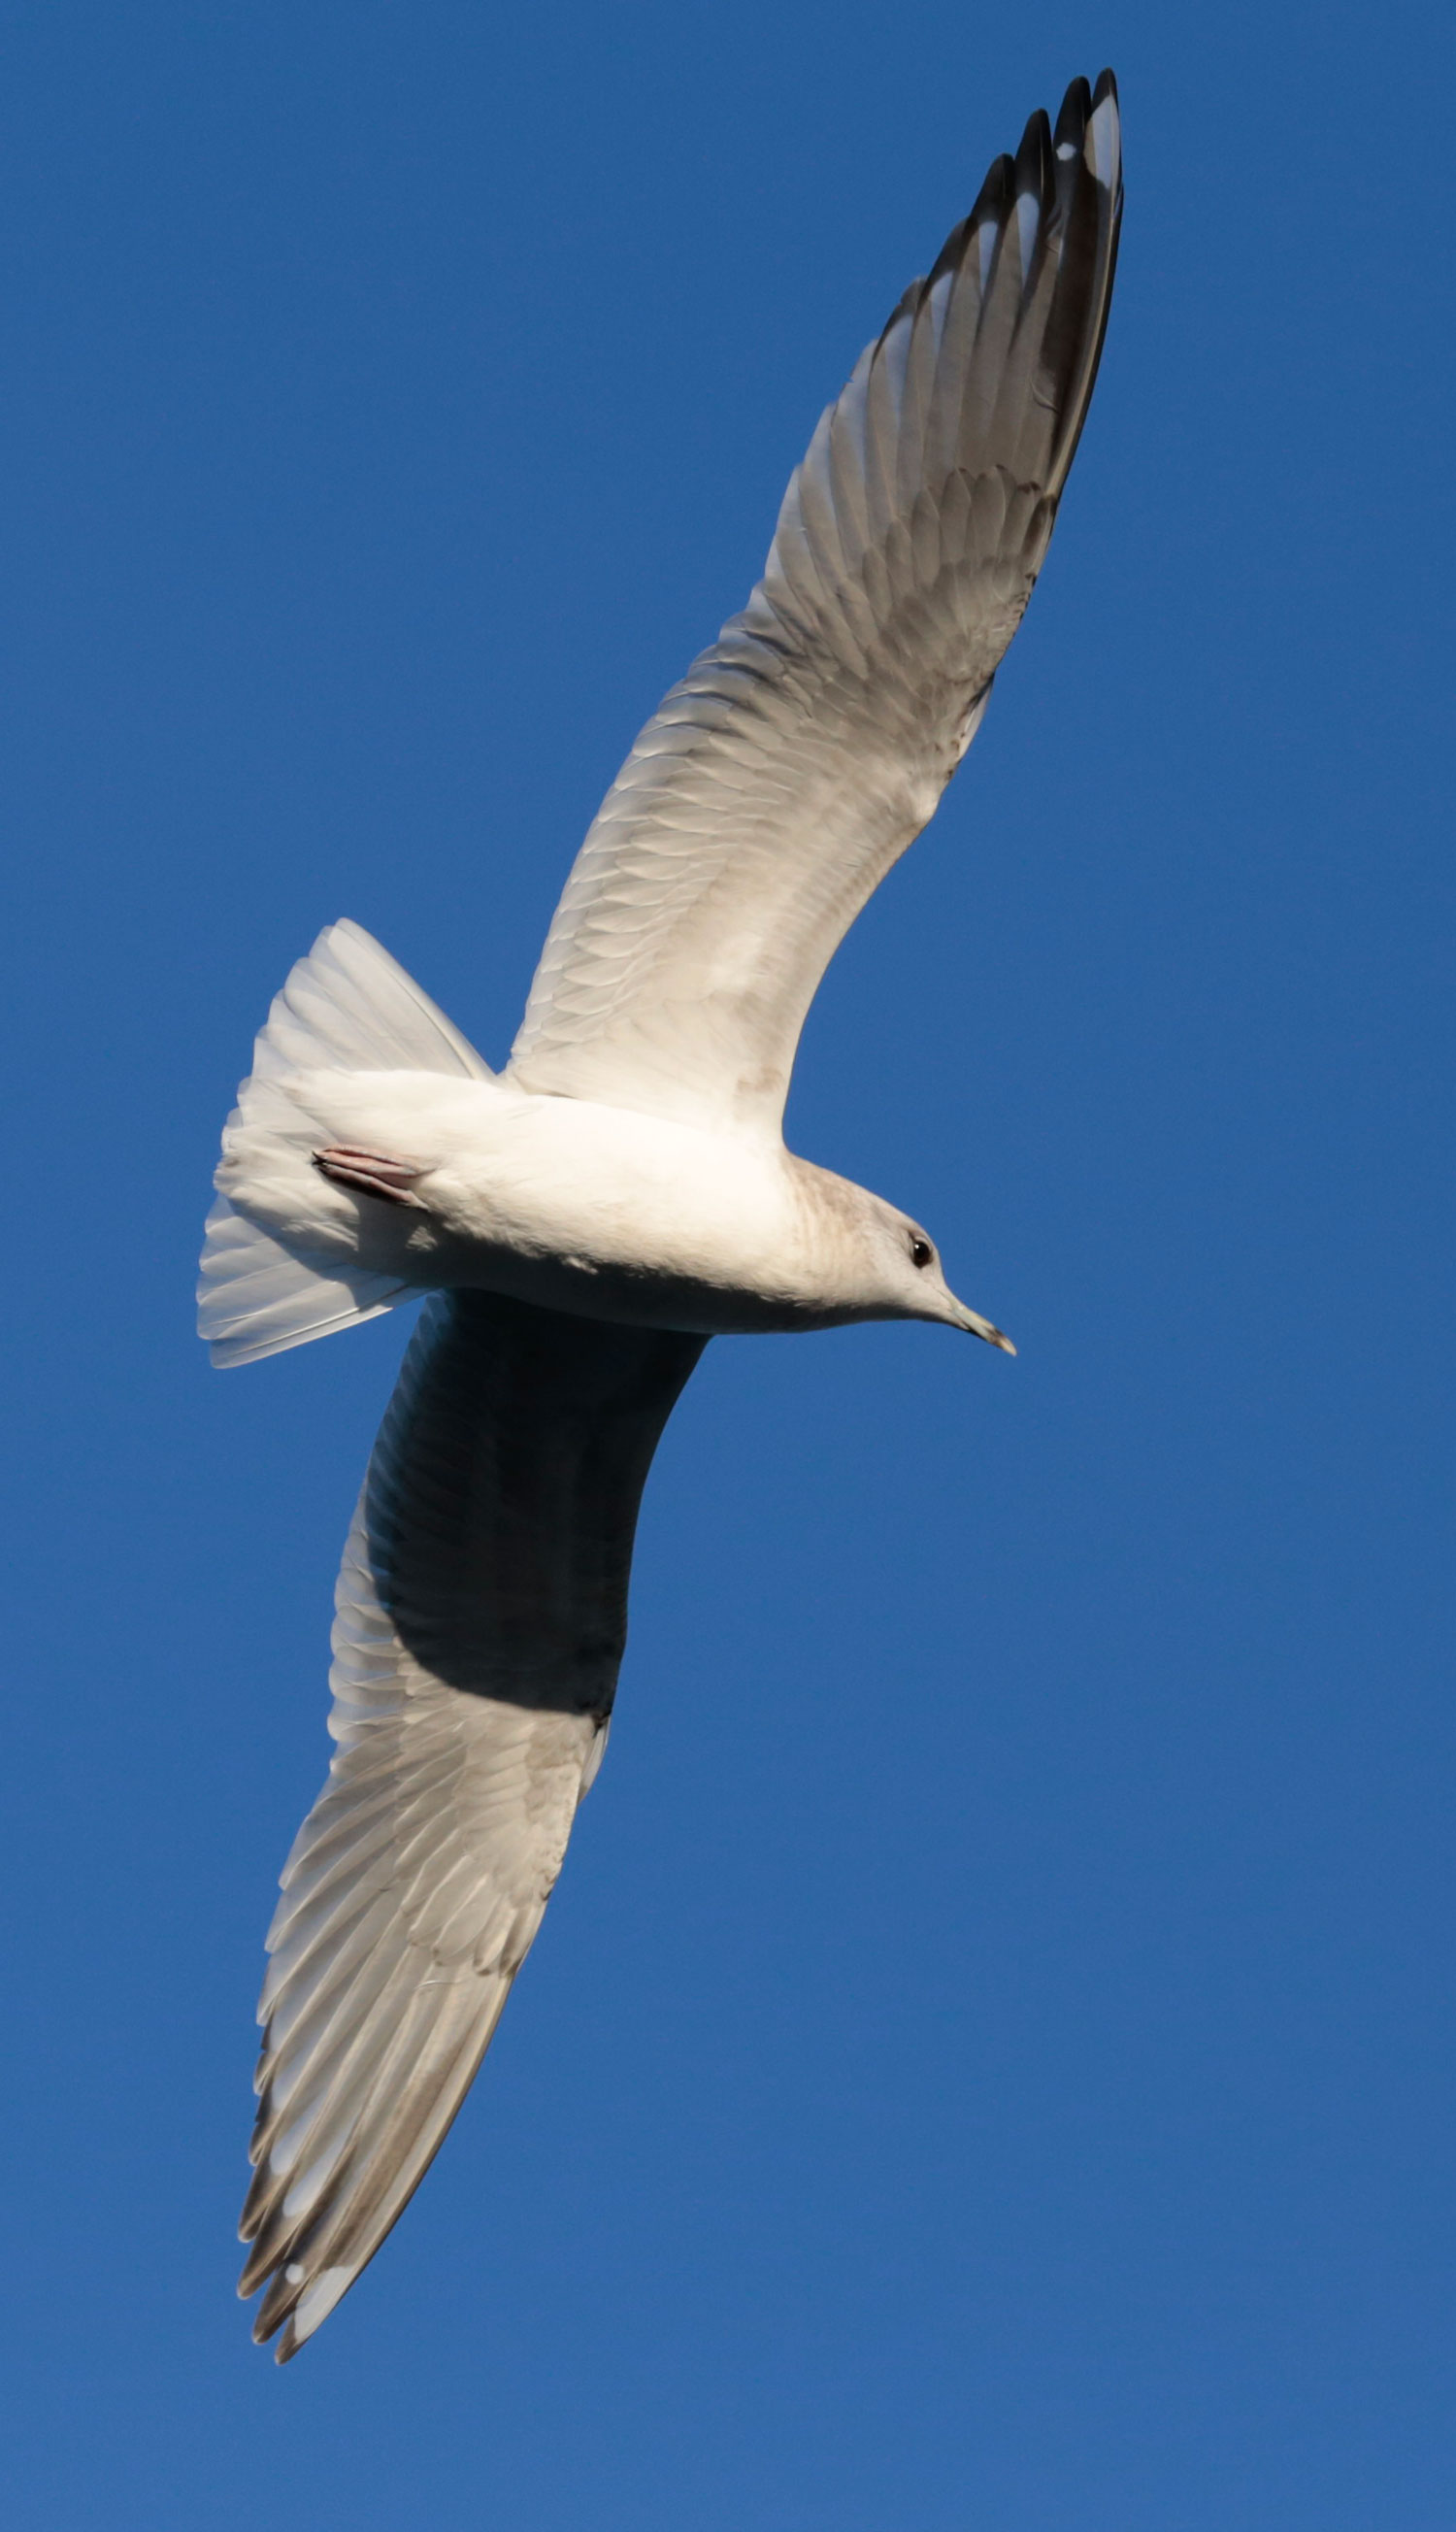 Graceful seagull soaring